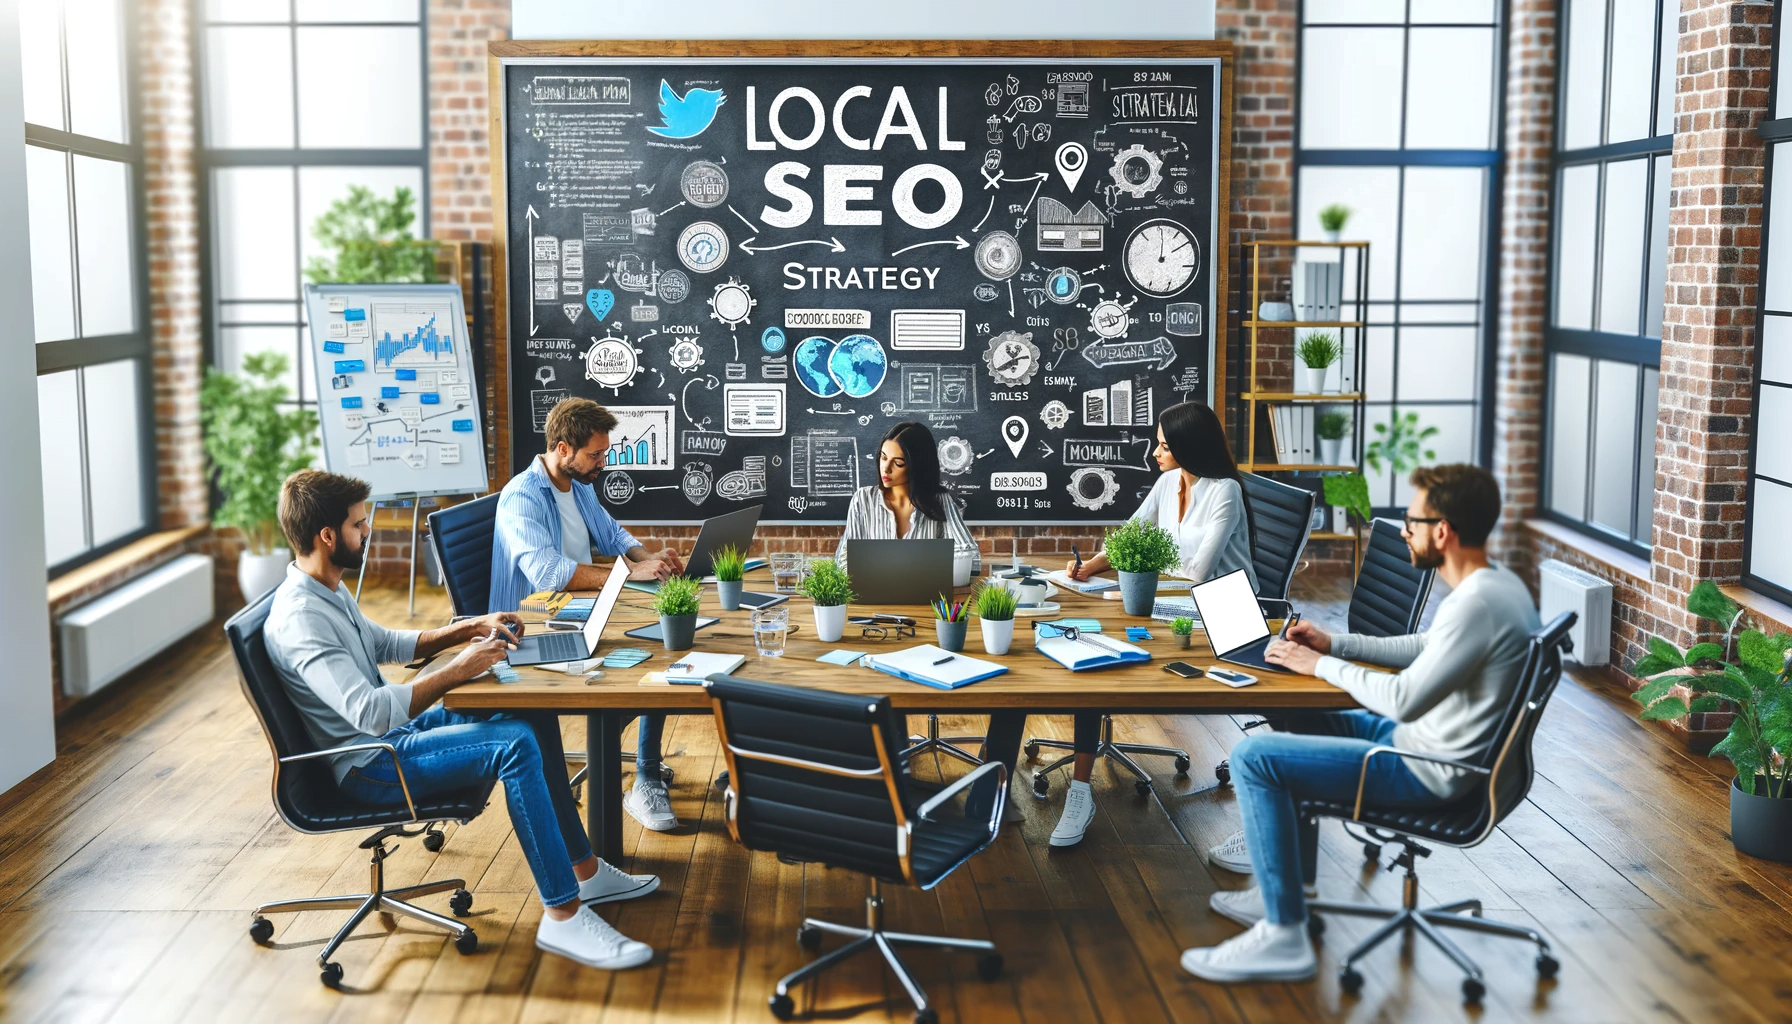 Local SEO for Social Media: Digital Marketing Team Brainstorming Local SEO Strategies